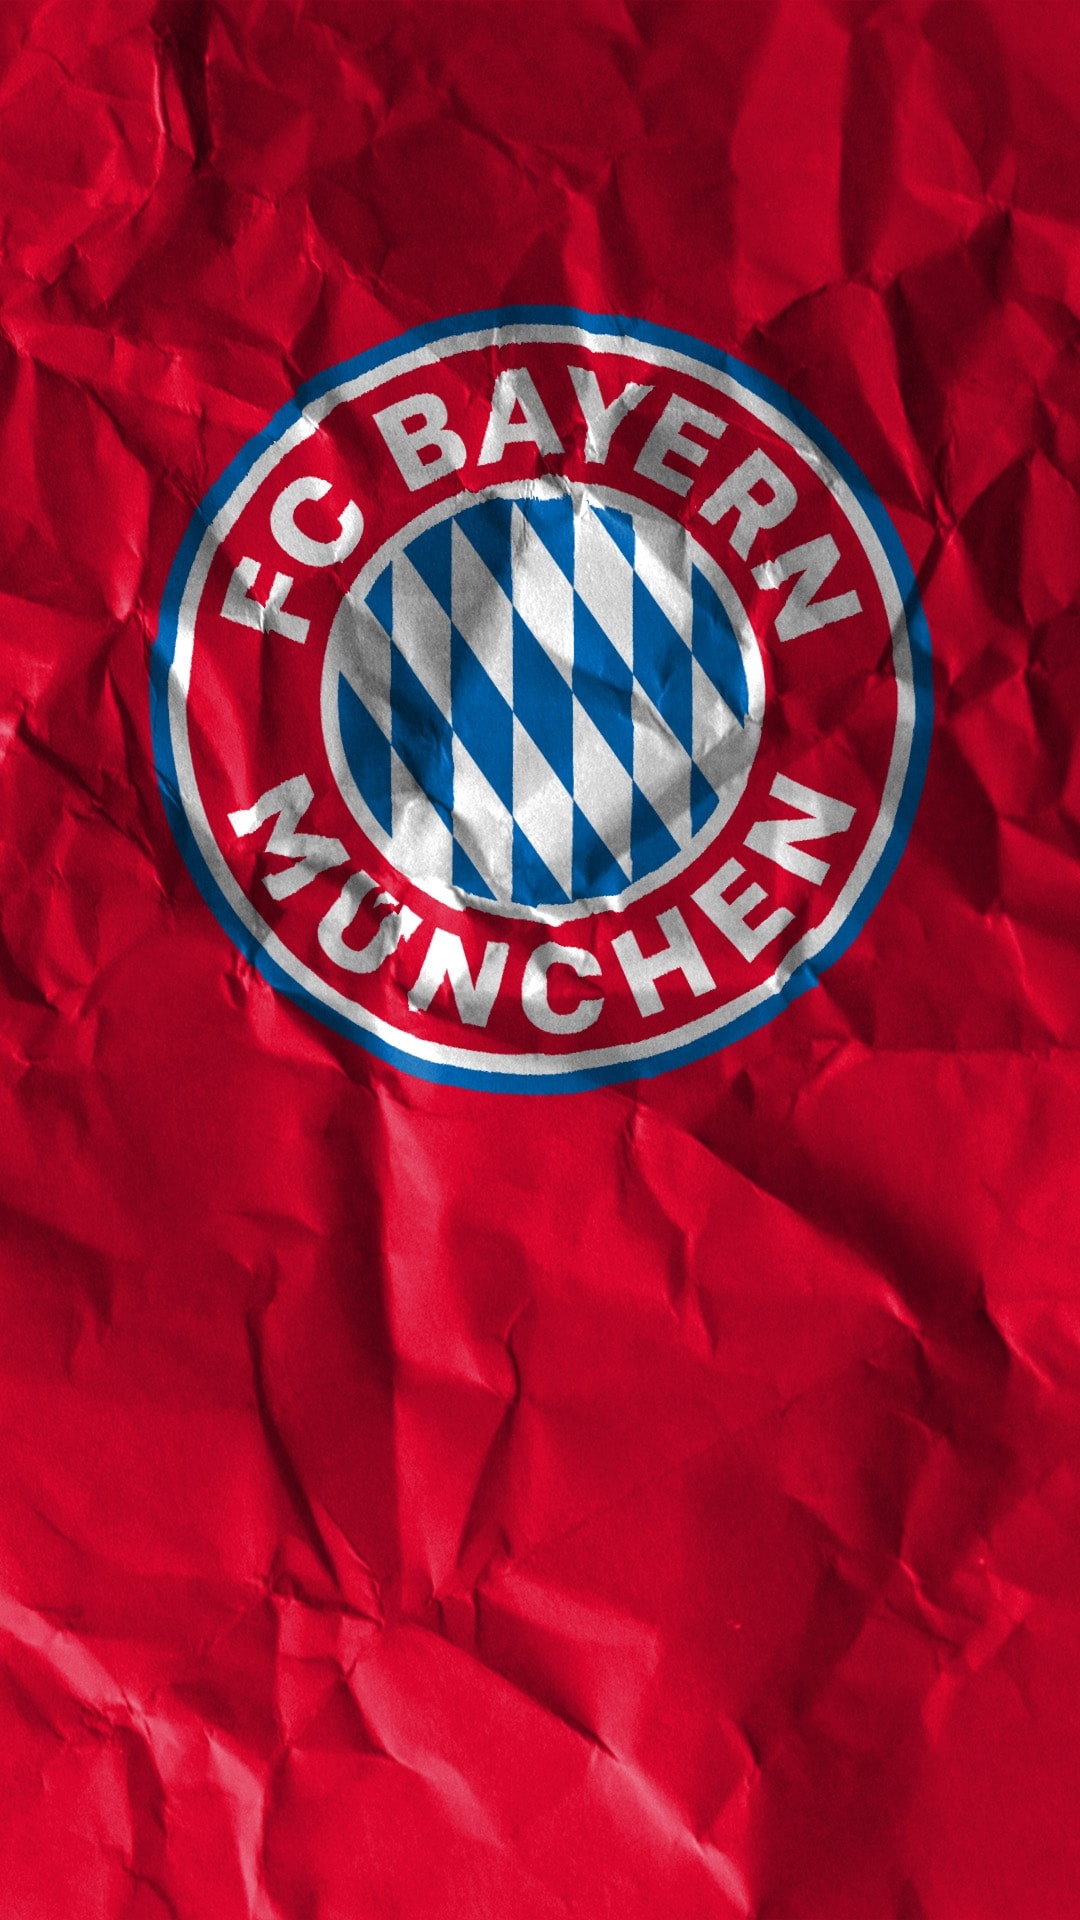 Bayern Munchen FC: Football team, Domestic and continental trophies. 1080x1920 Full HD Wallpaper.